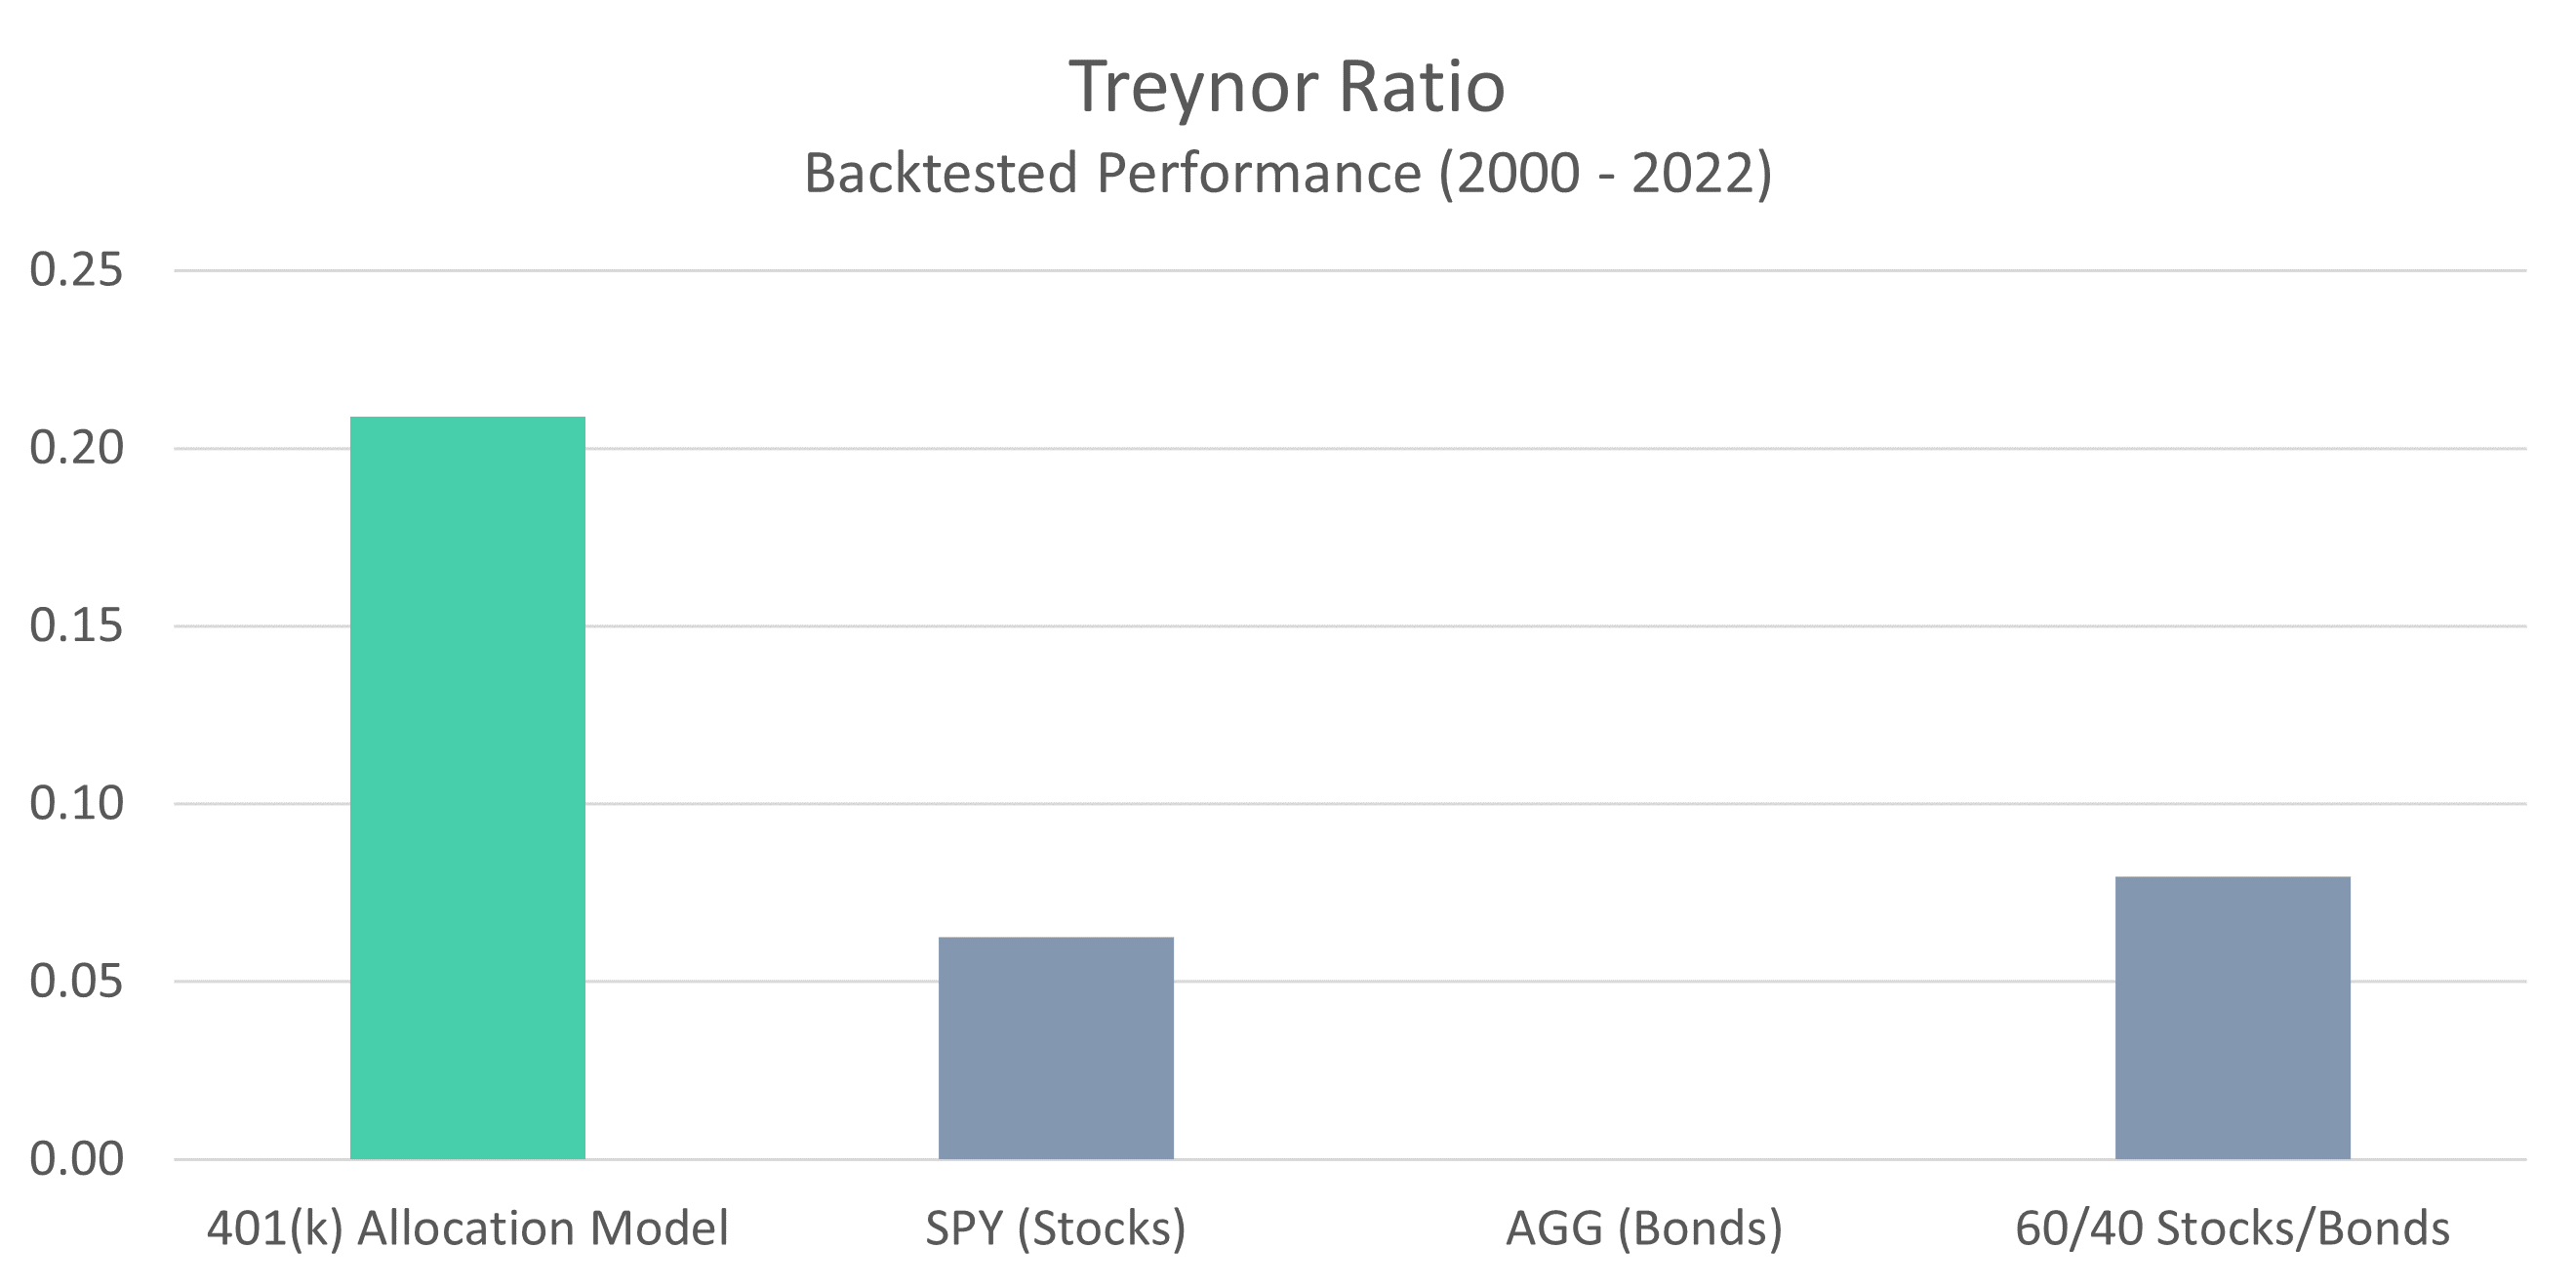 401 Model Treynor Ratio